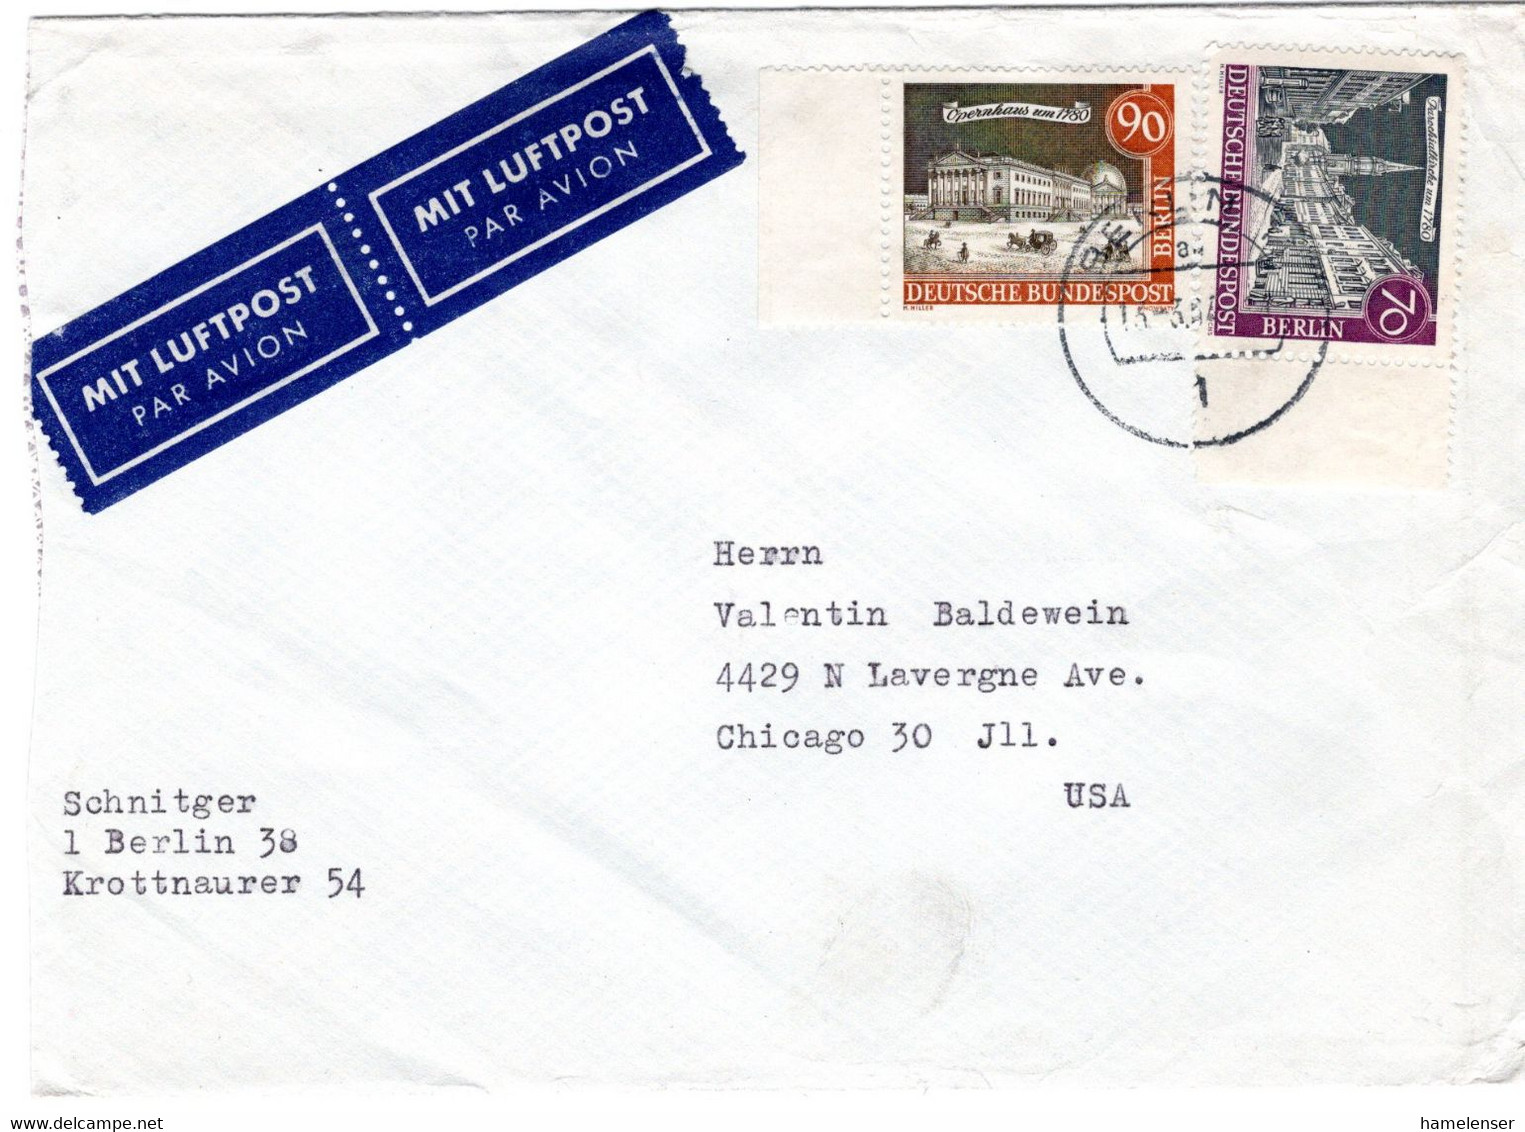 57614 - Berlin - 1964 - 90Pfg Alt-Berlin MiF A LpBf BERLIN -> Chicago, IL (USA) - Covers & Documents